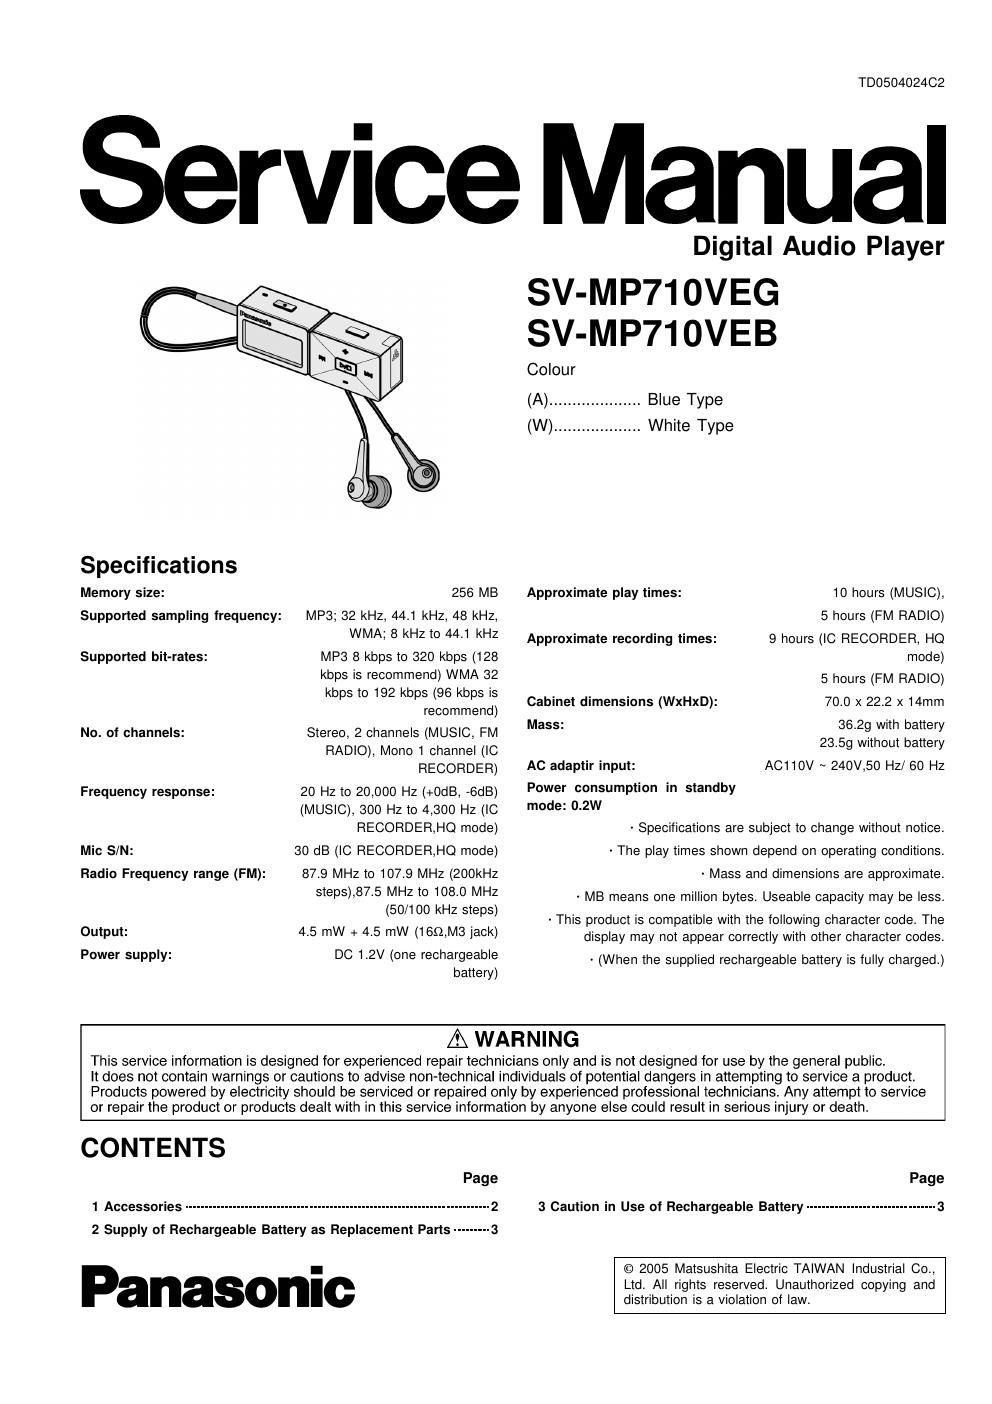 panasonic sv mp 710 veb service manual